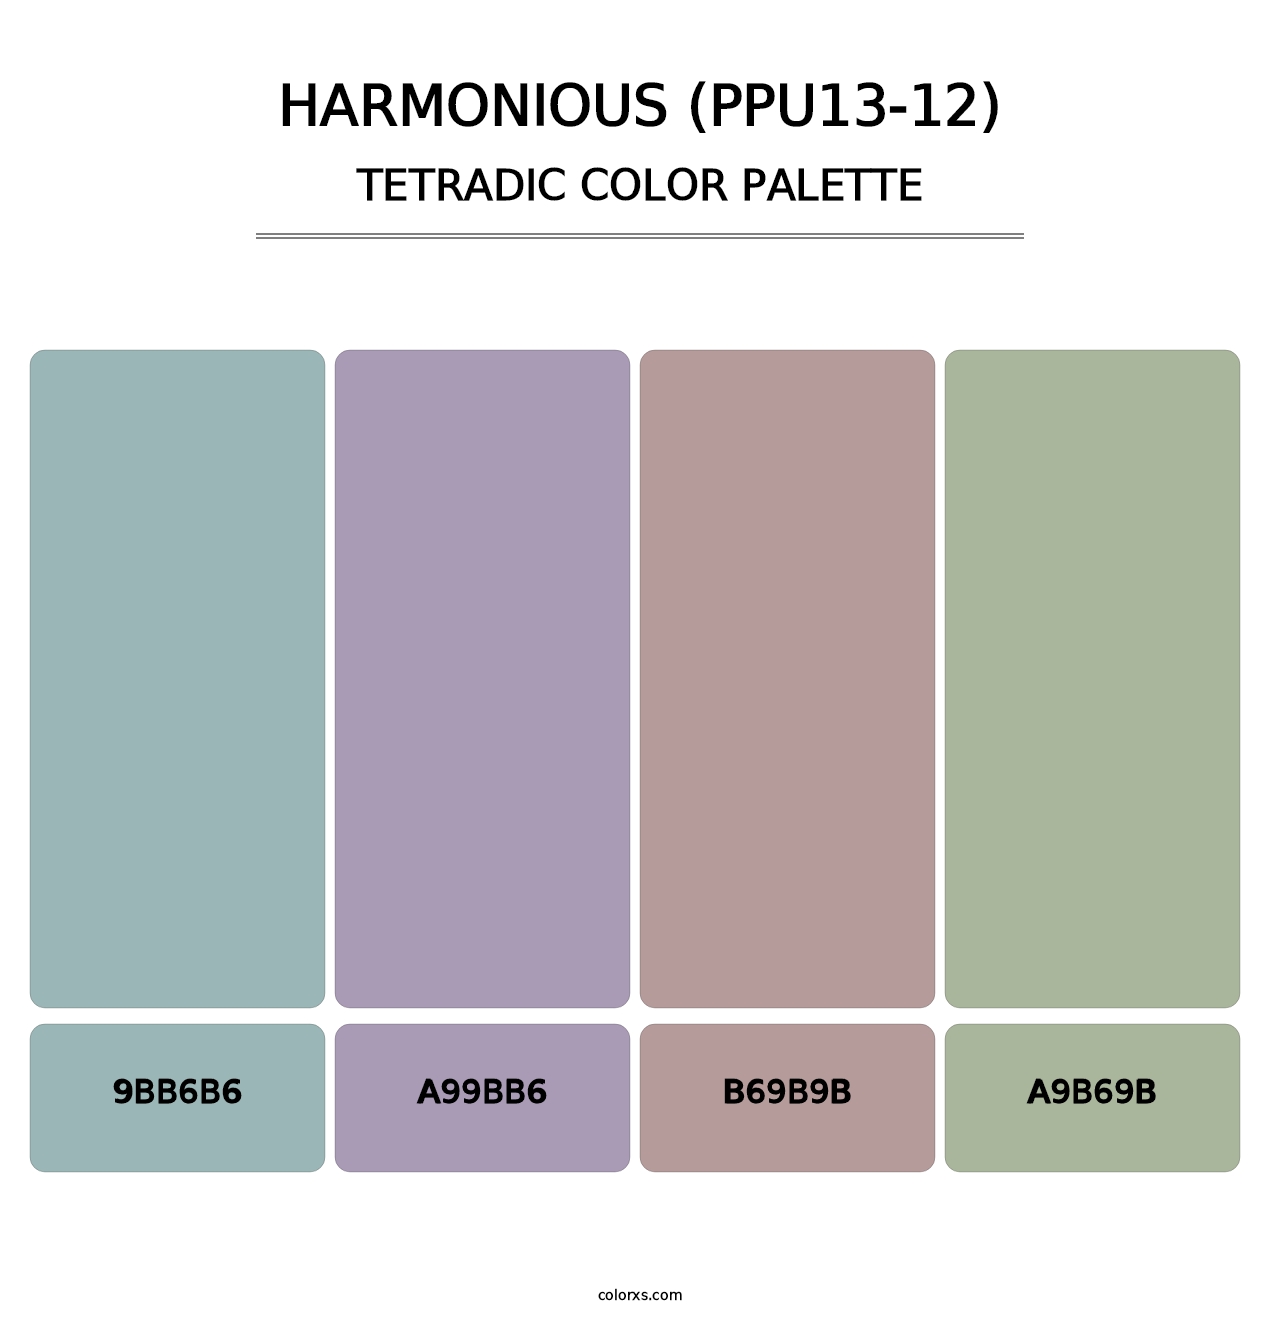 Harmonious (PPU13-12) - Tetradic Color Palette